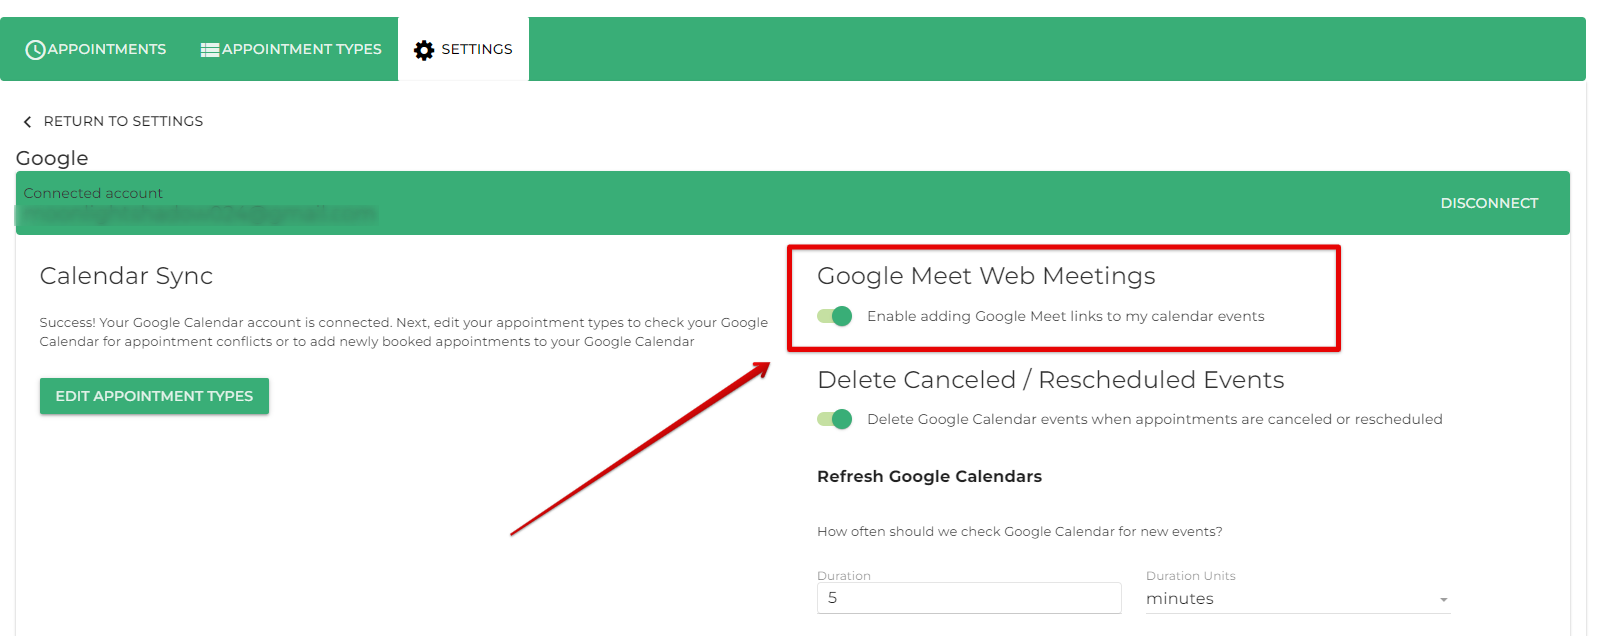 Google meet web meetings settings